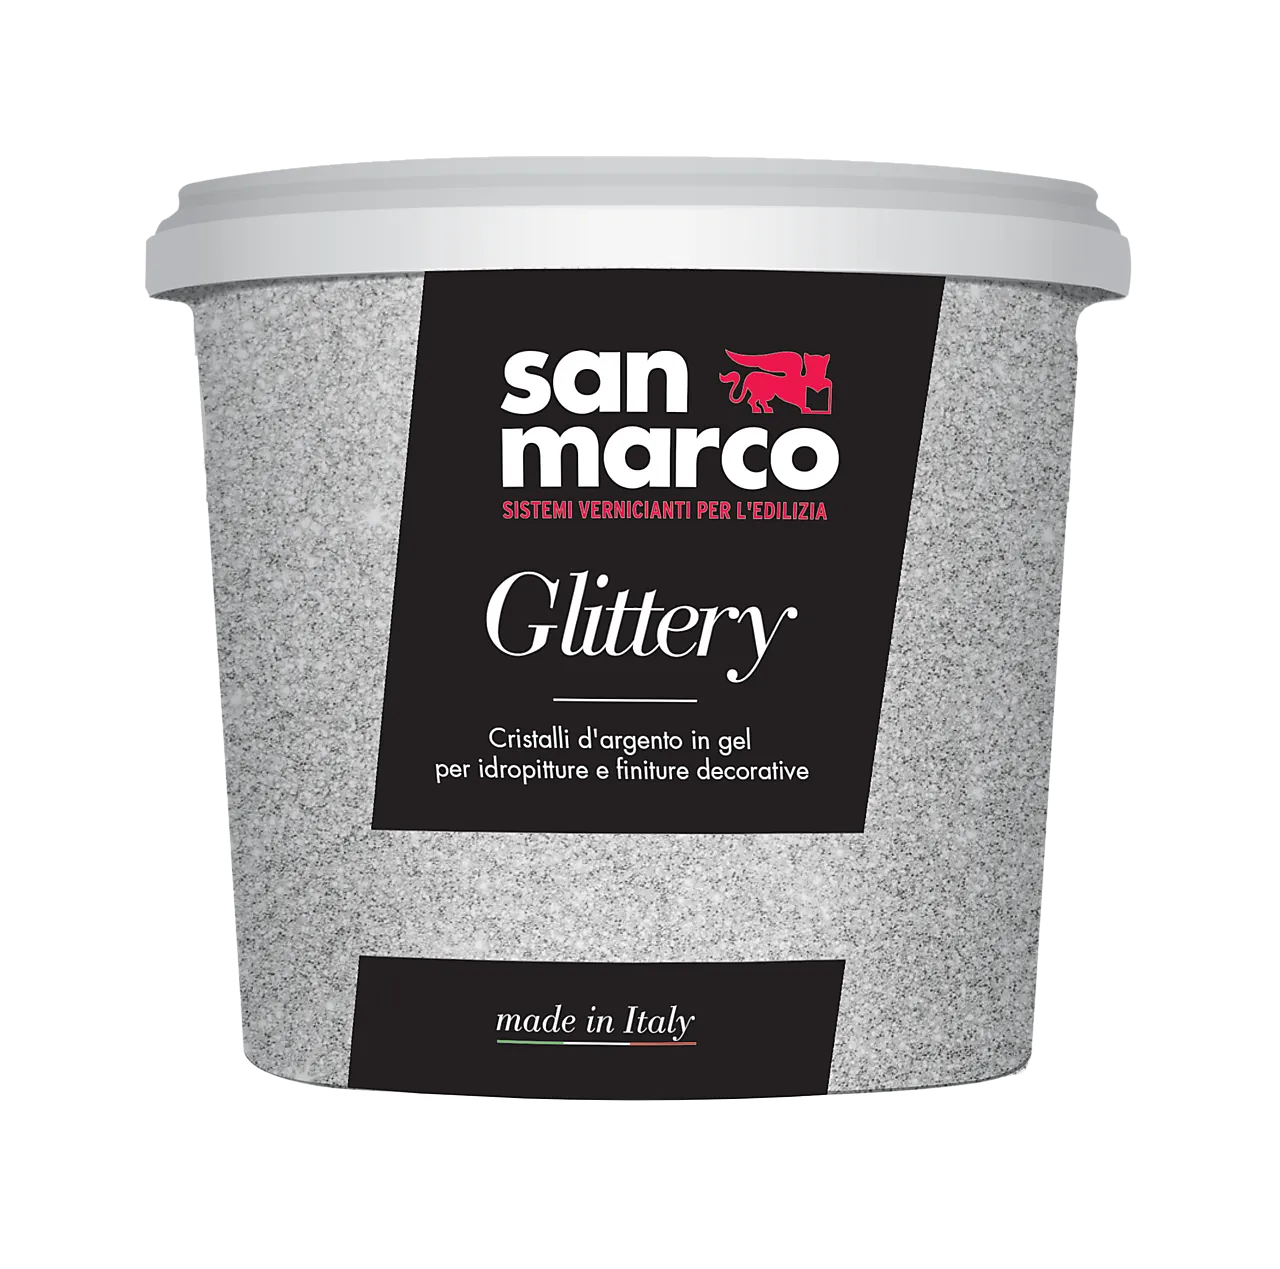 Marcopolo glitter glittery 0,25l